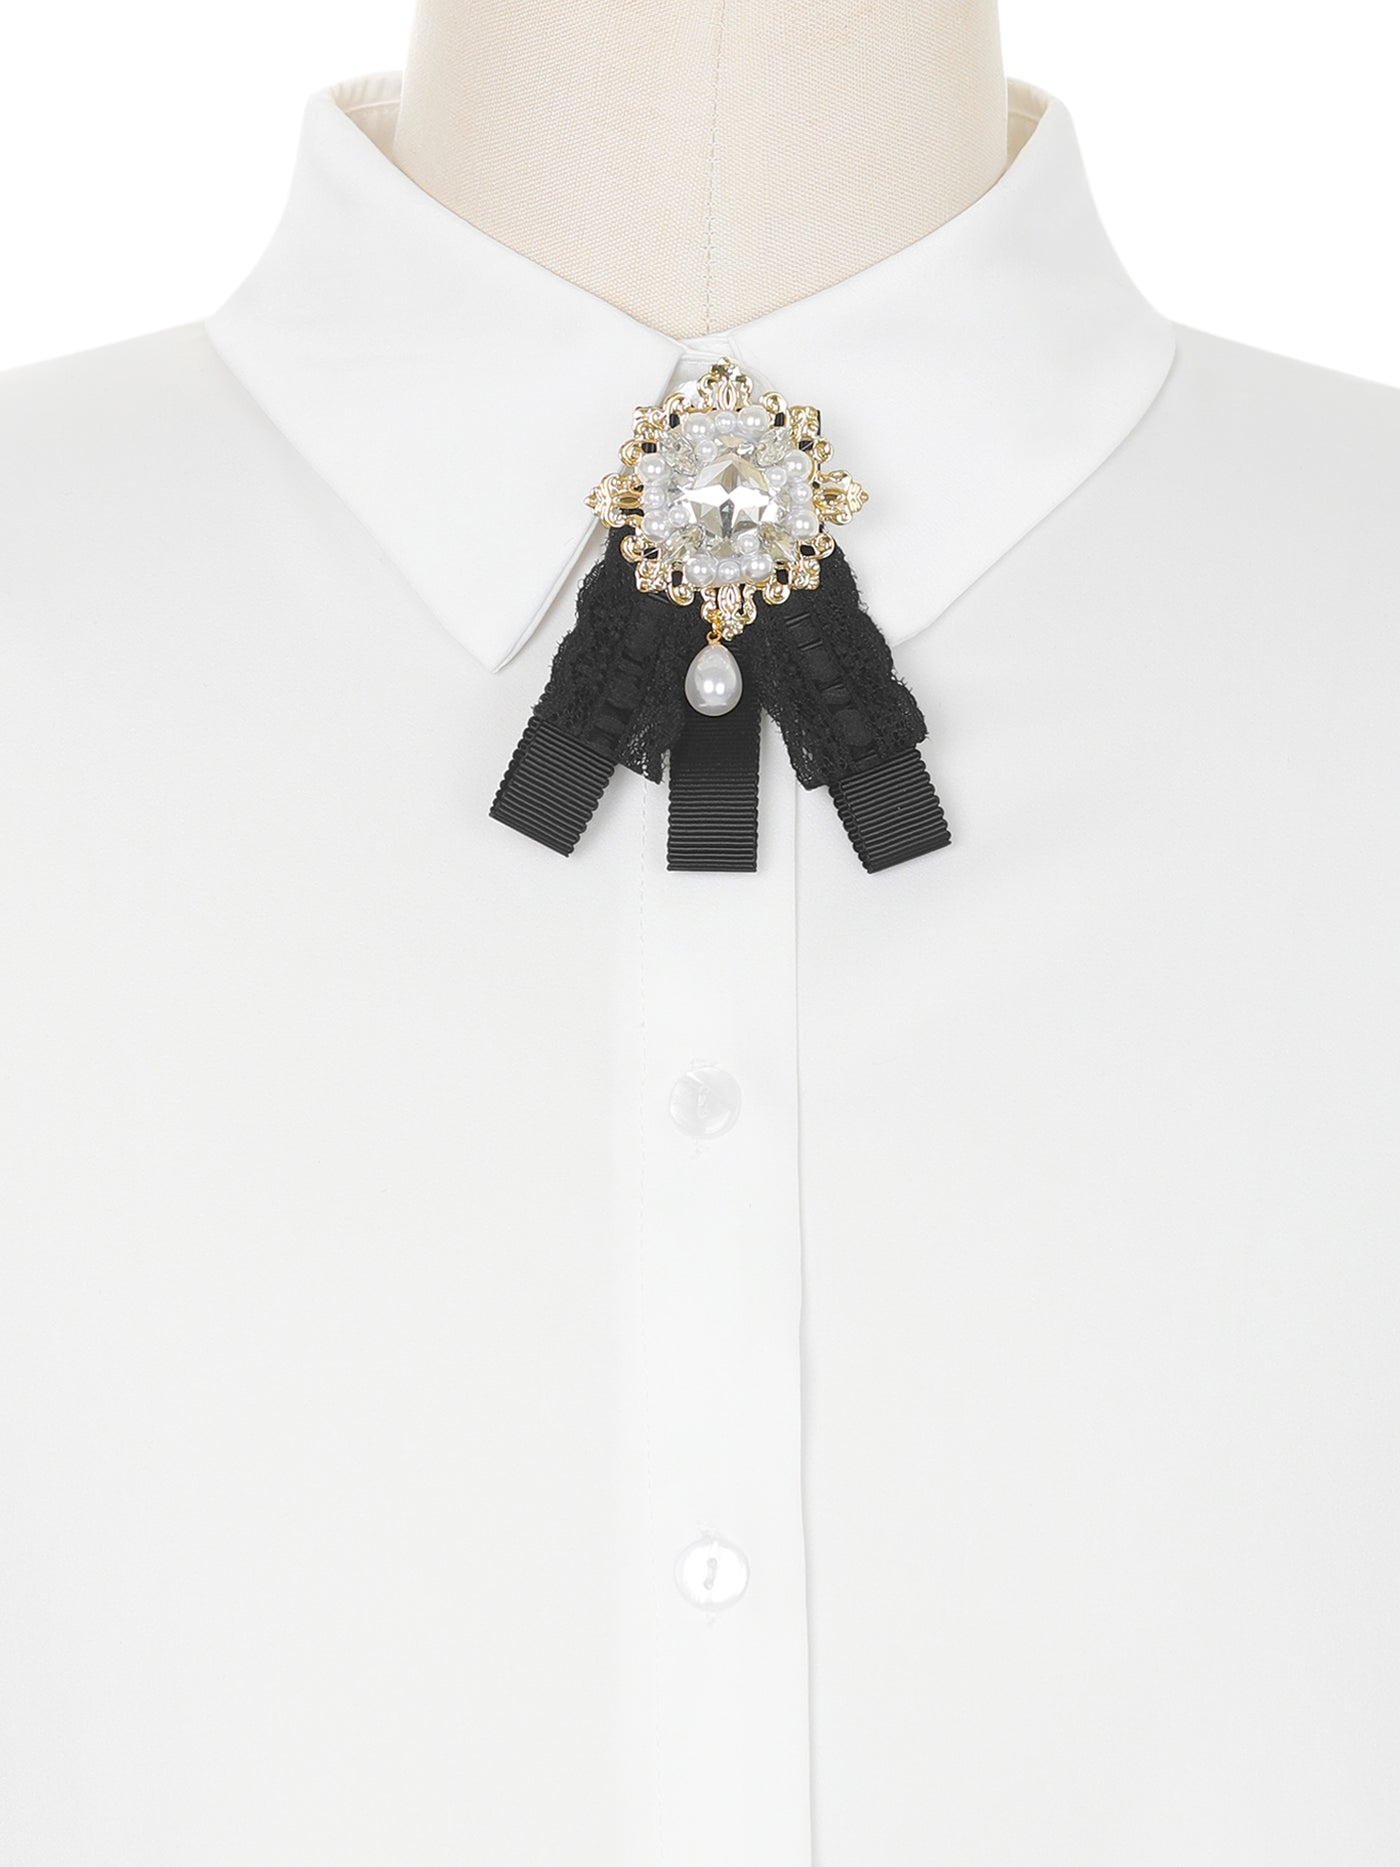 Bublédon Women's Bowknot Brooch Lace Bow Tie Elegant Shirt Neckline Preppy Collar Pin